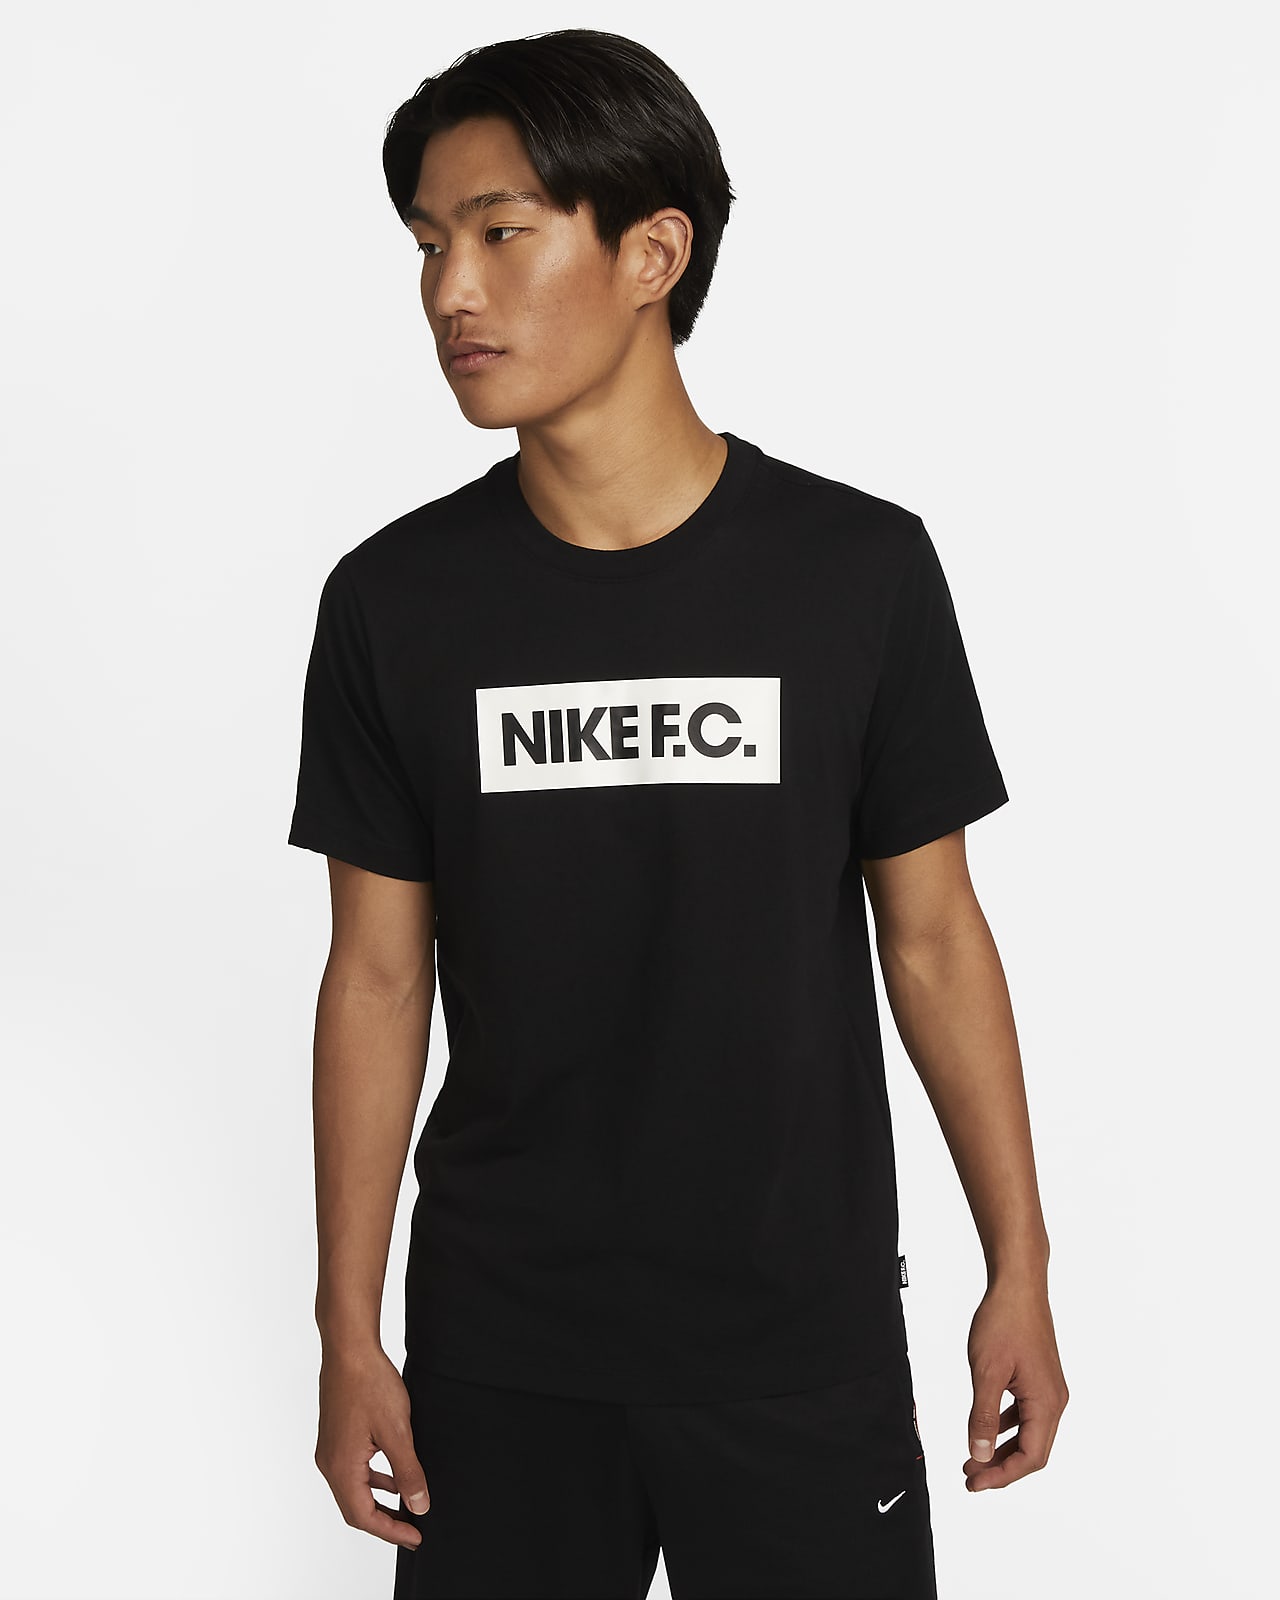 Nike F.C. Men's Football T-Shirt.